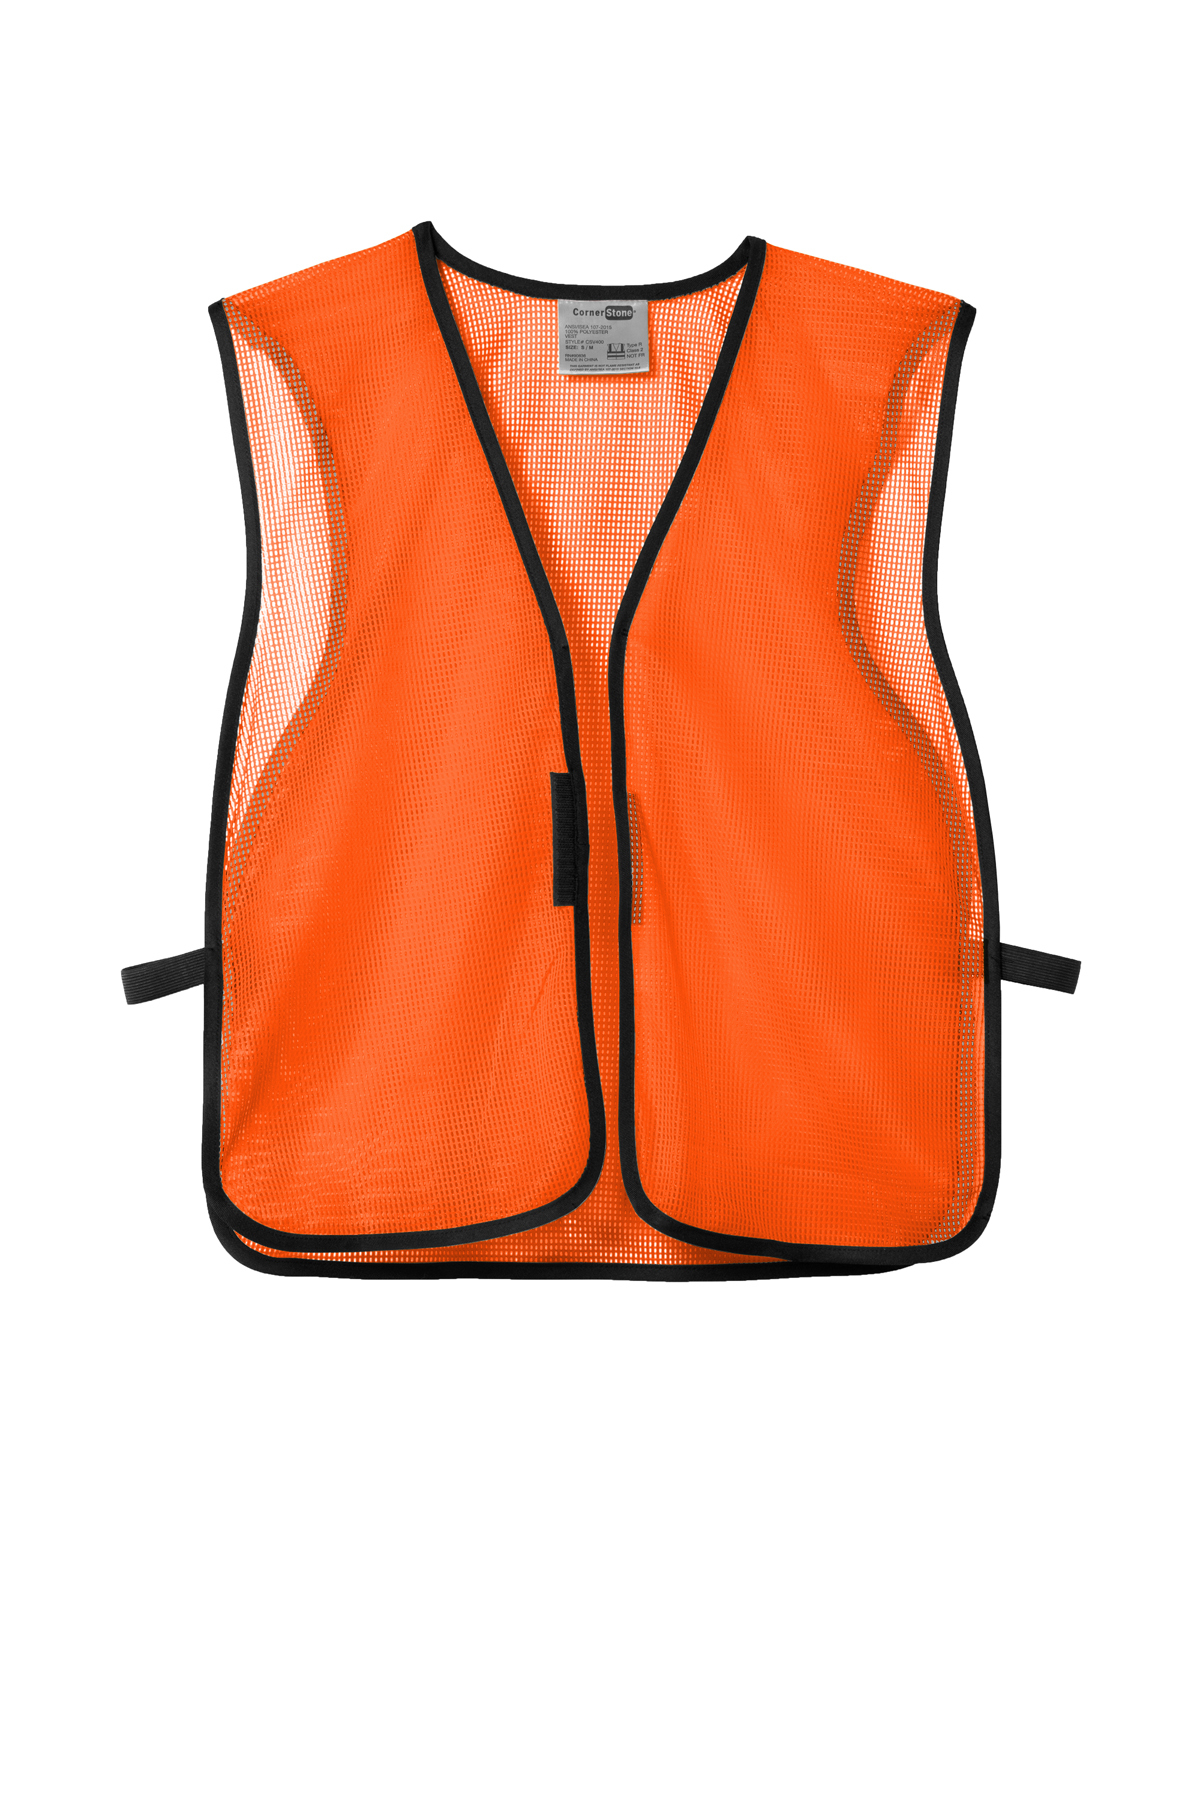 CornerStone CSV01 - Enhanced Visibility Mesh Vest